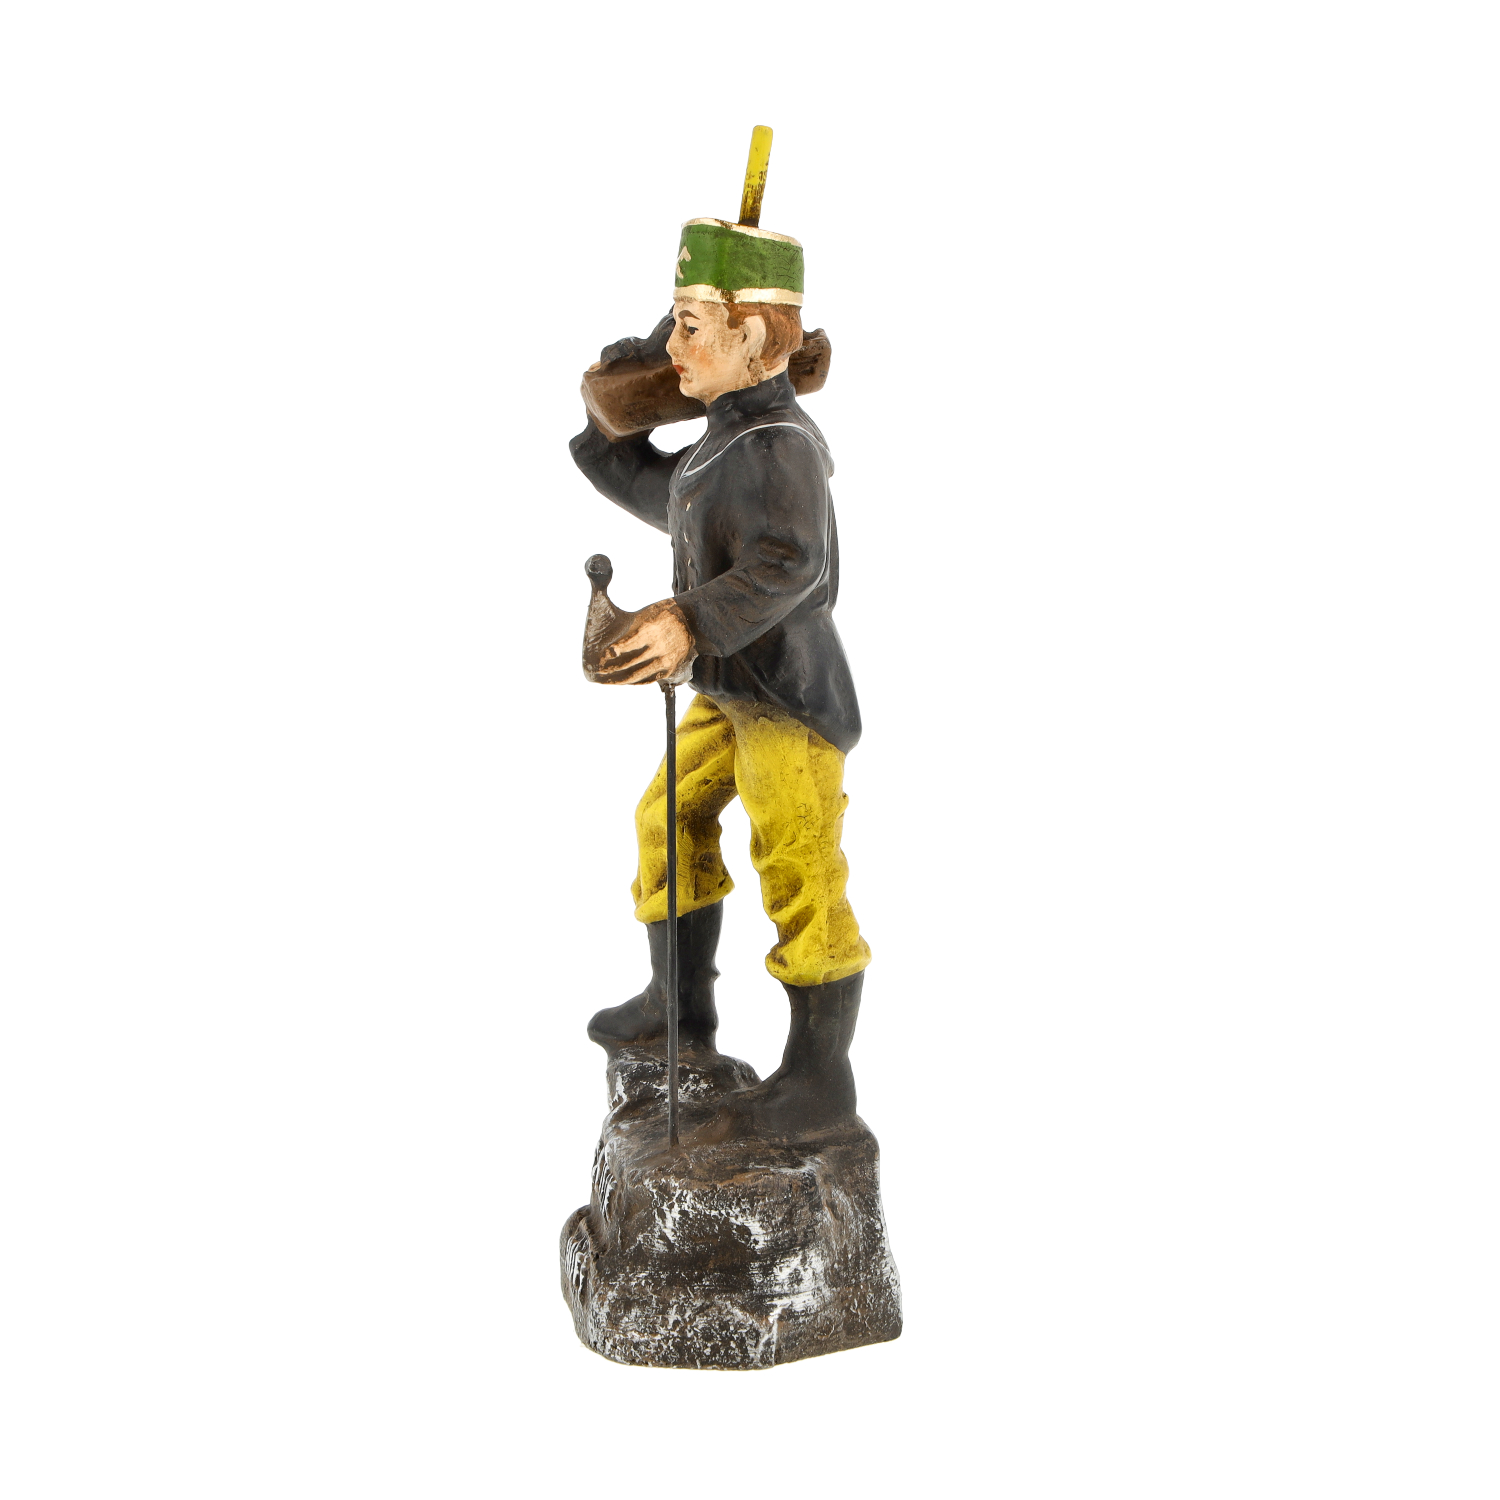 Miner in parade uniform, H = 12,5cm